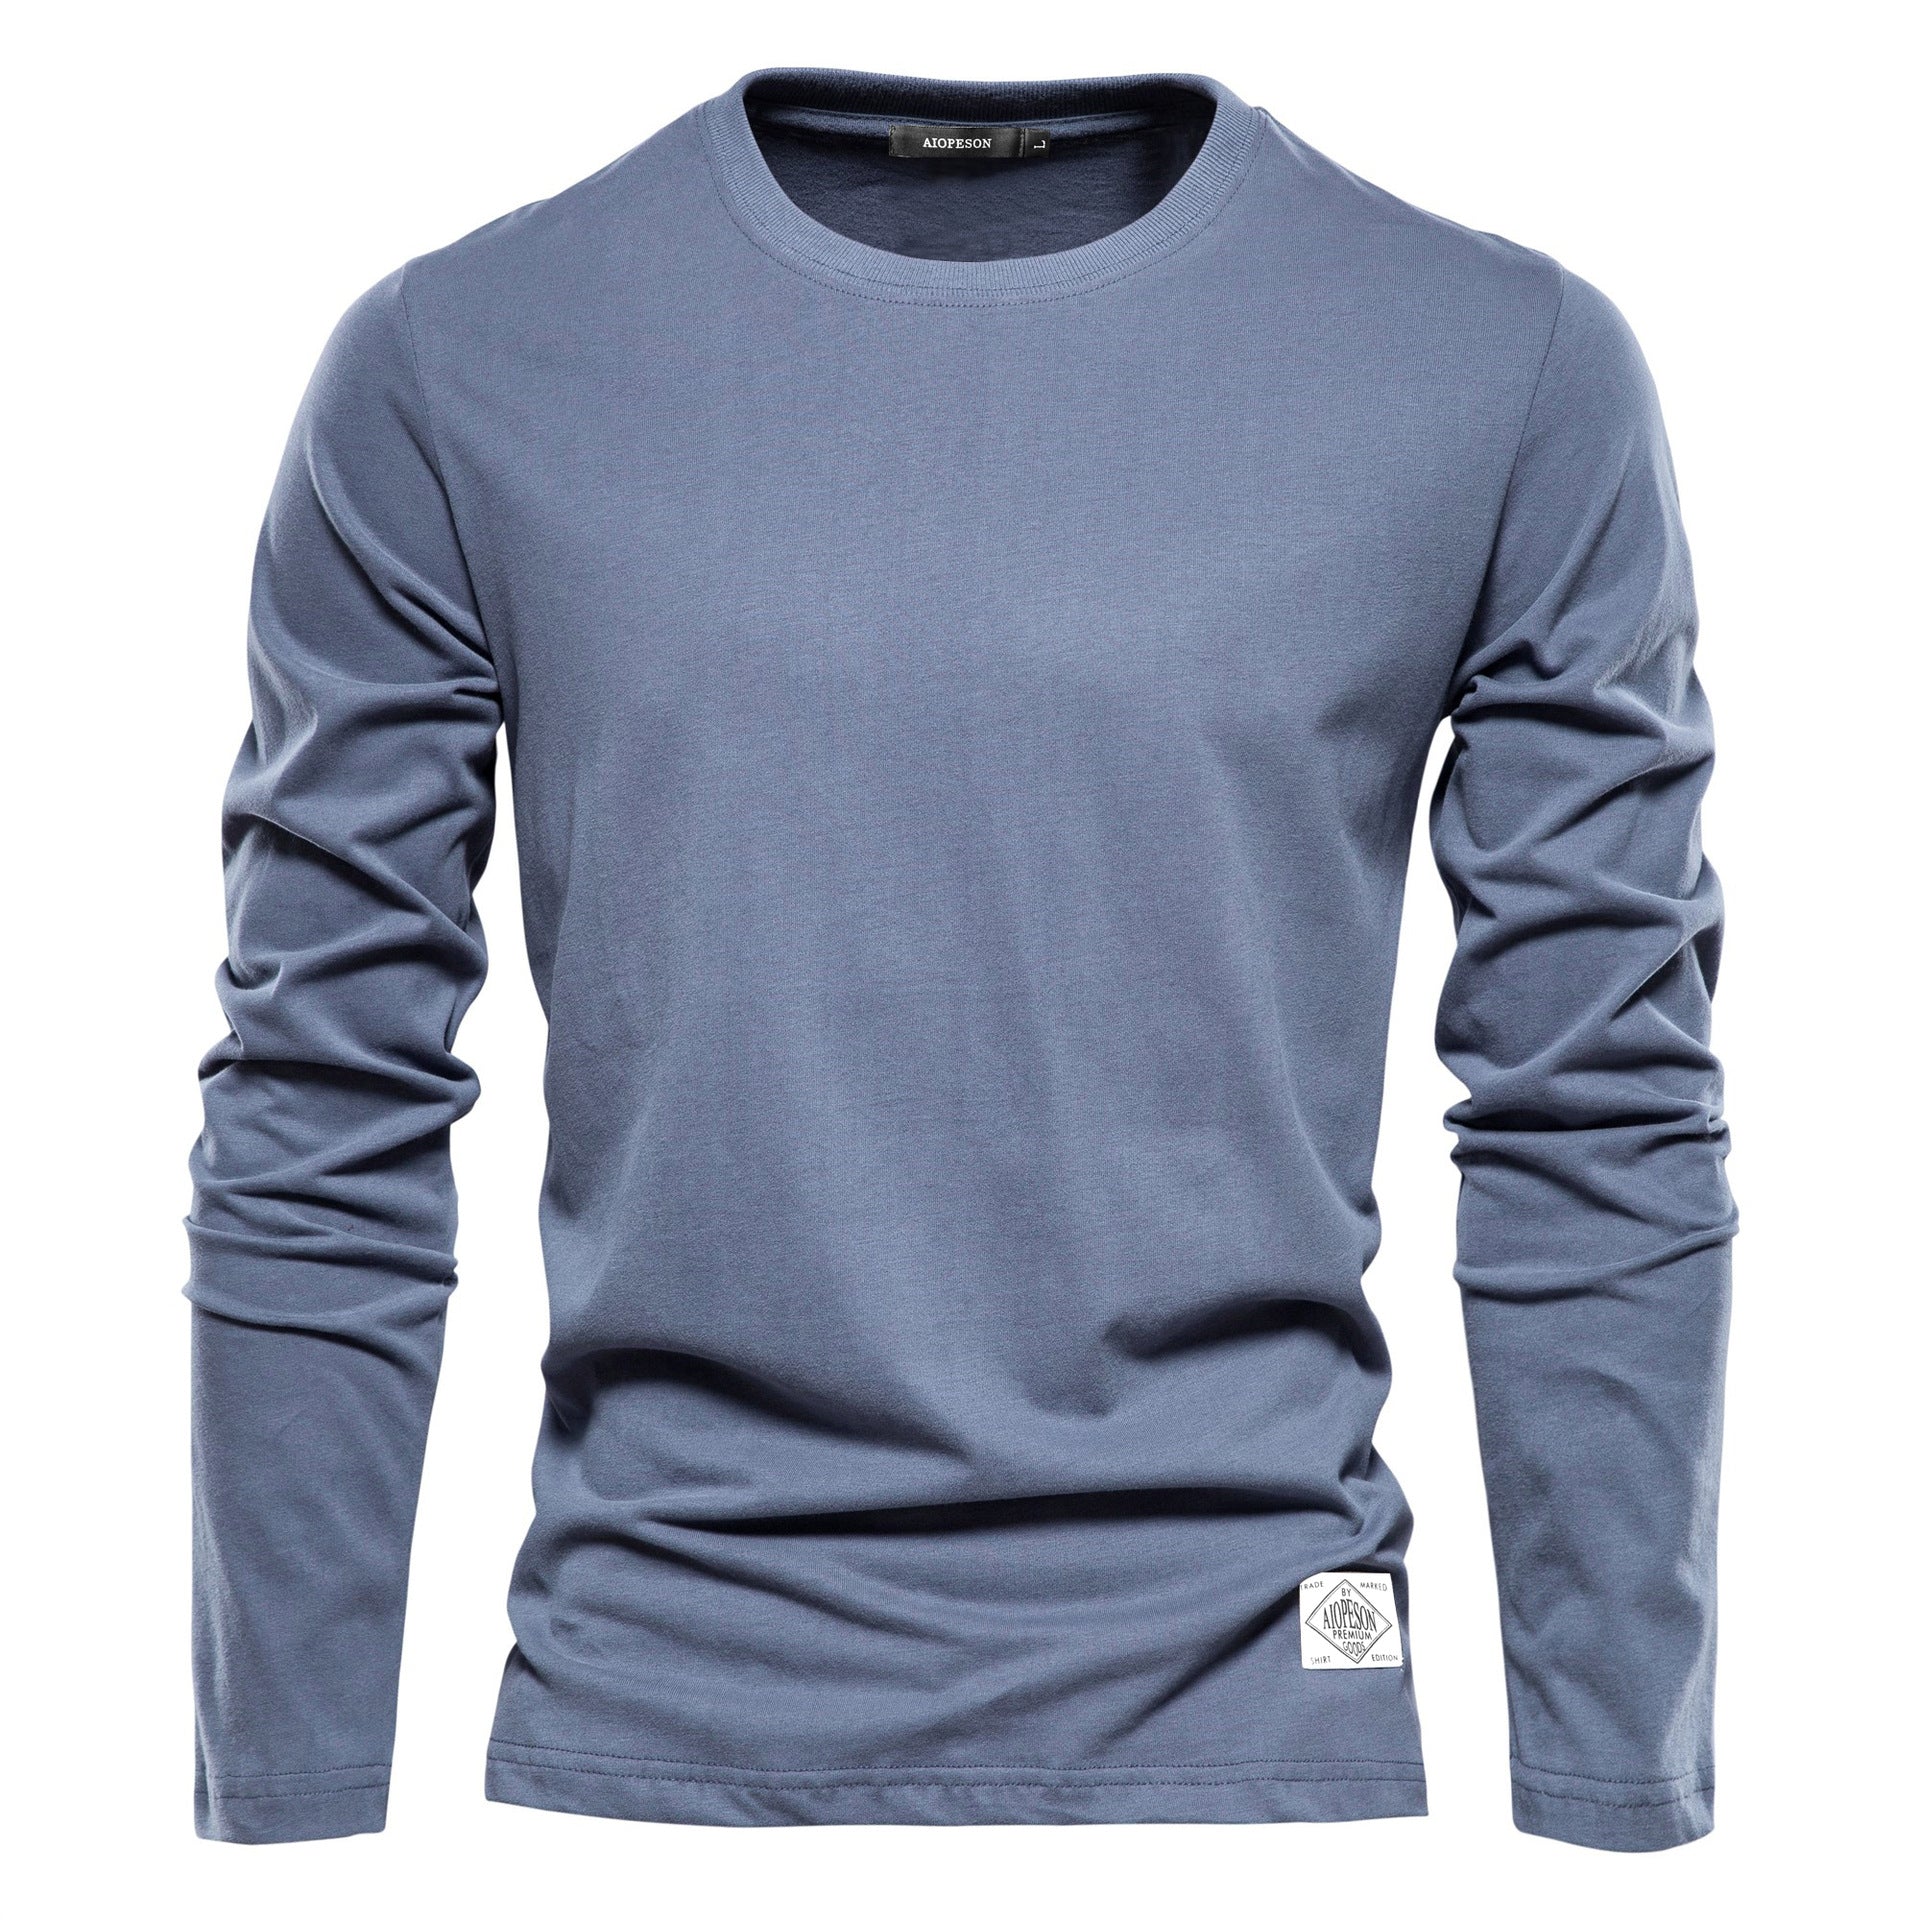 Men's Casual Exercise Outer Wear Round Neck Cotton Base Shirt